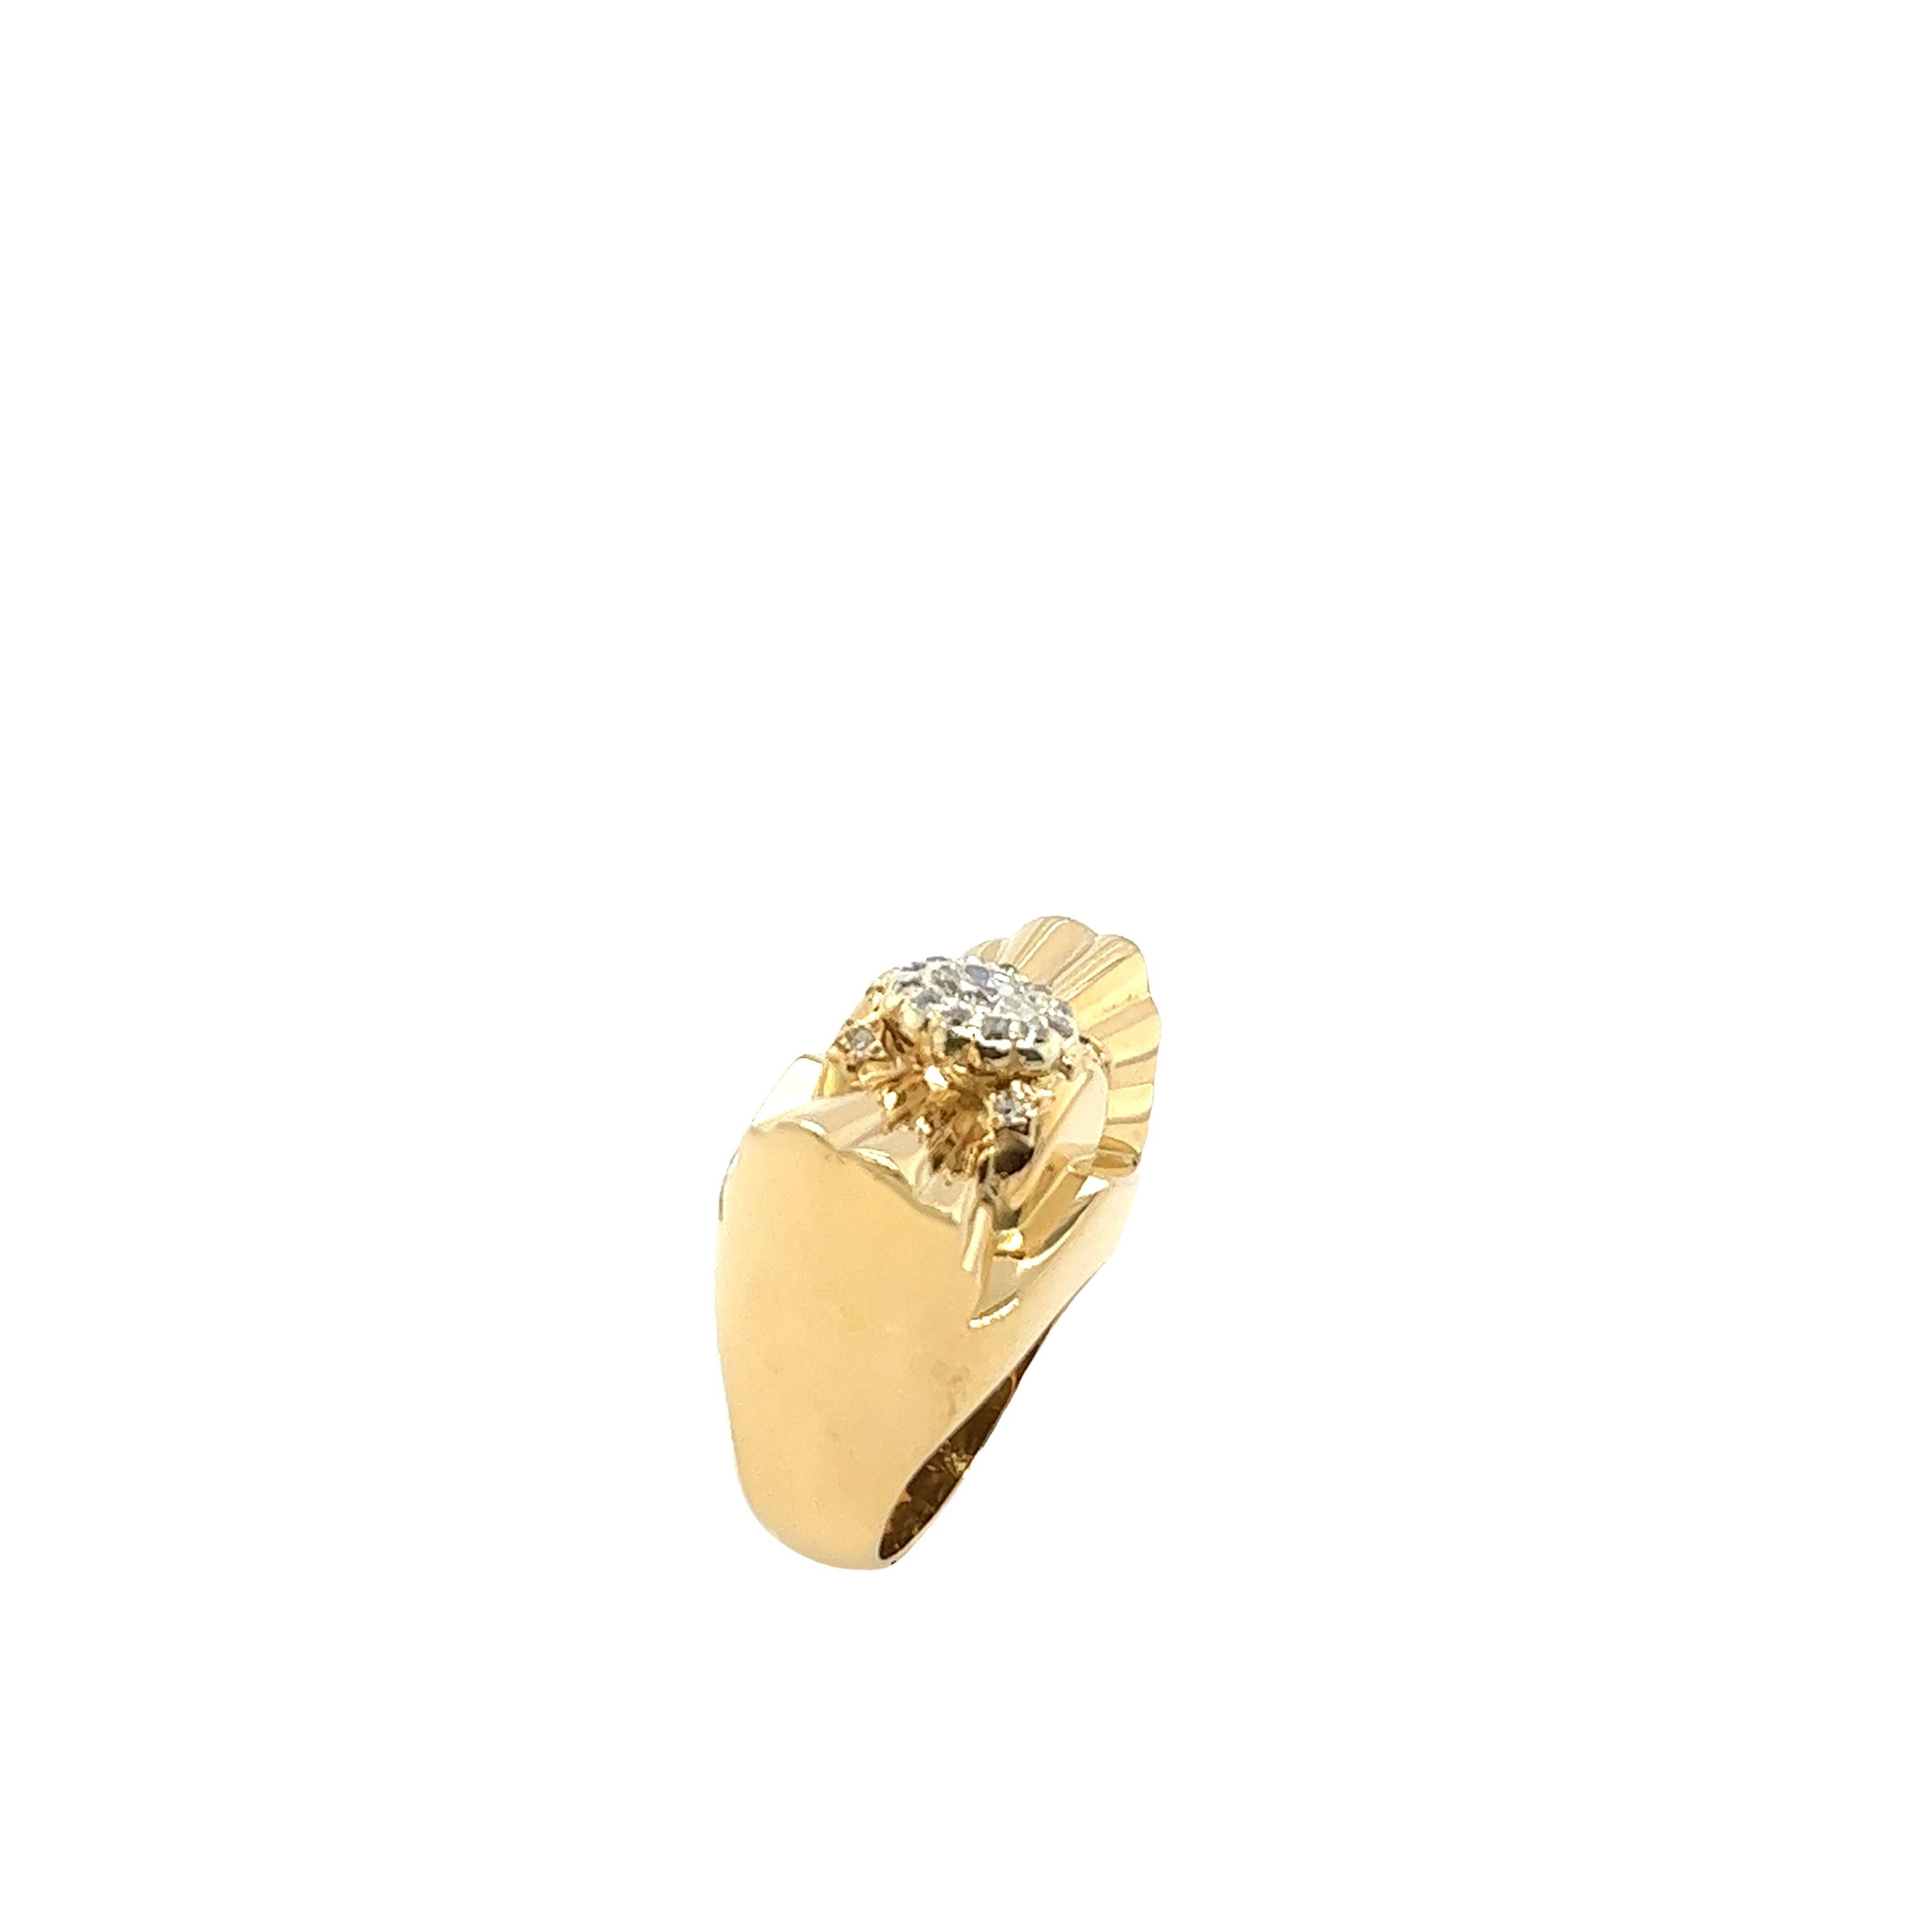 Women's 1950's Art Deco 14ct Yellow Gold Fan Shape Ring Set With Victorian Cut Diamond